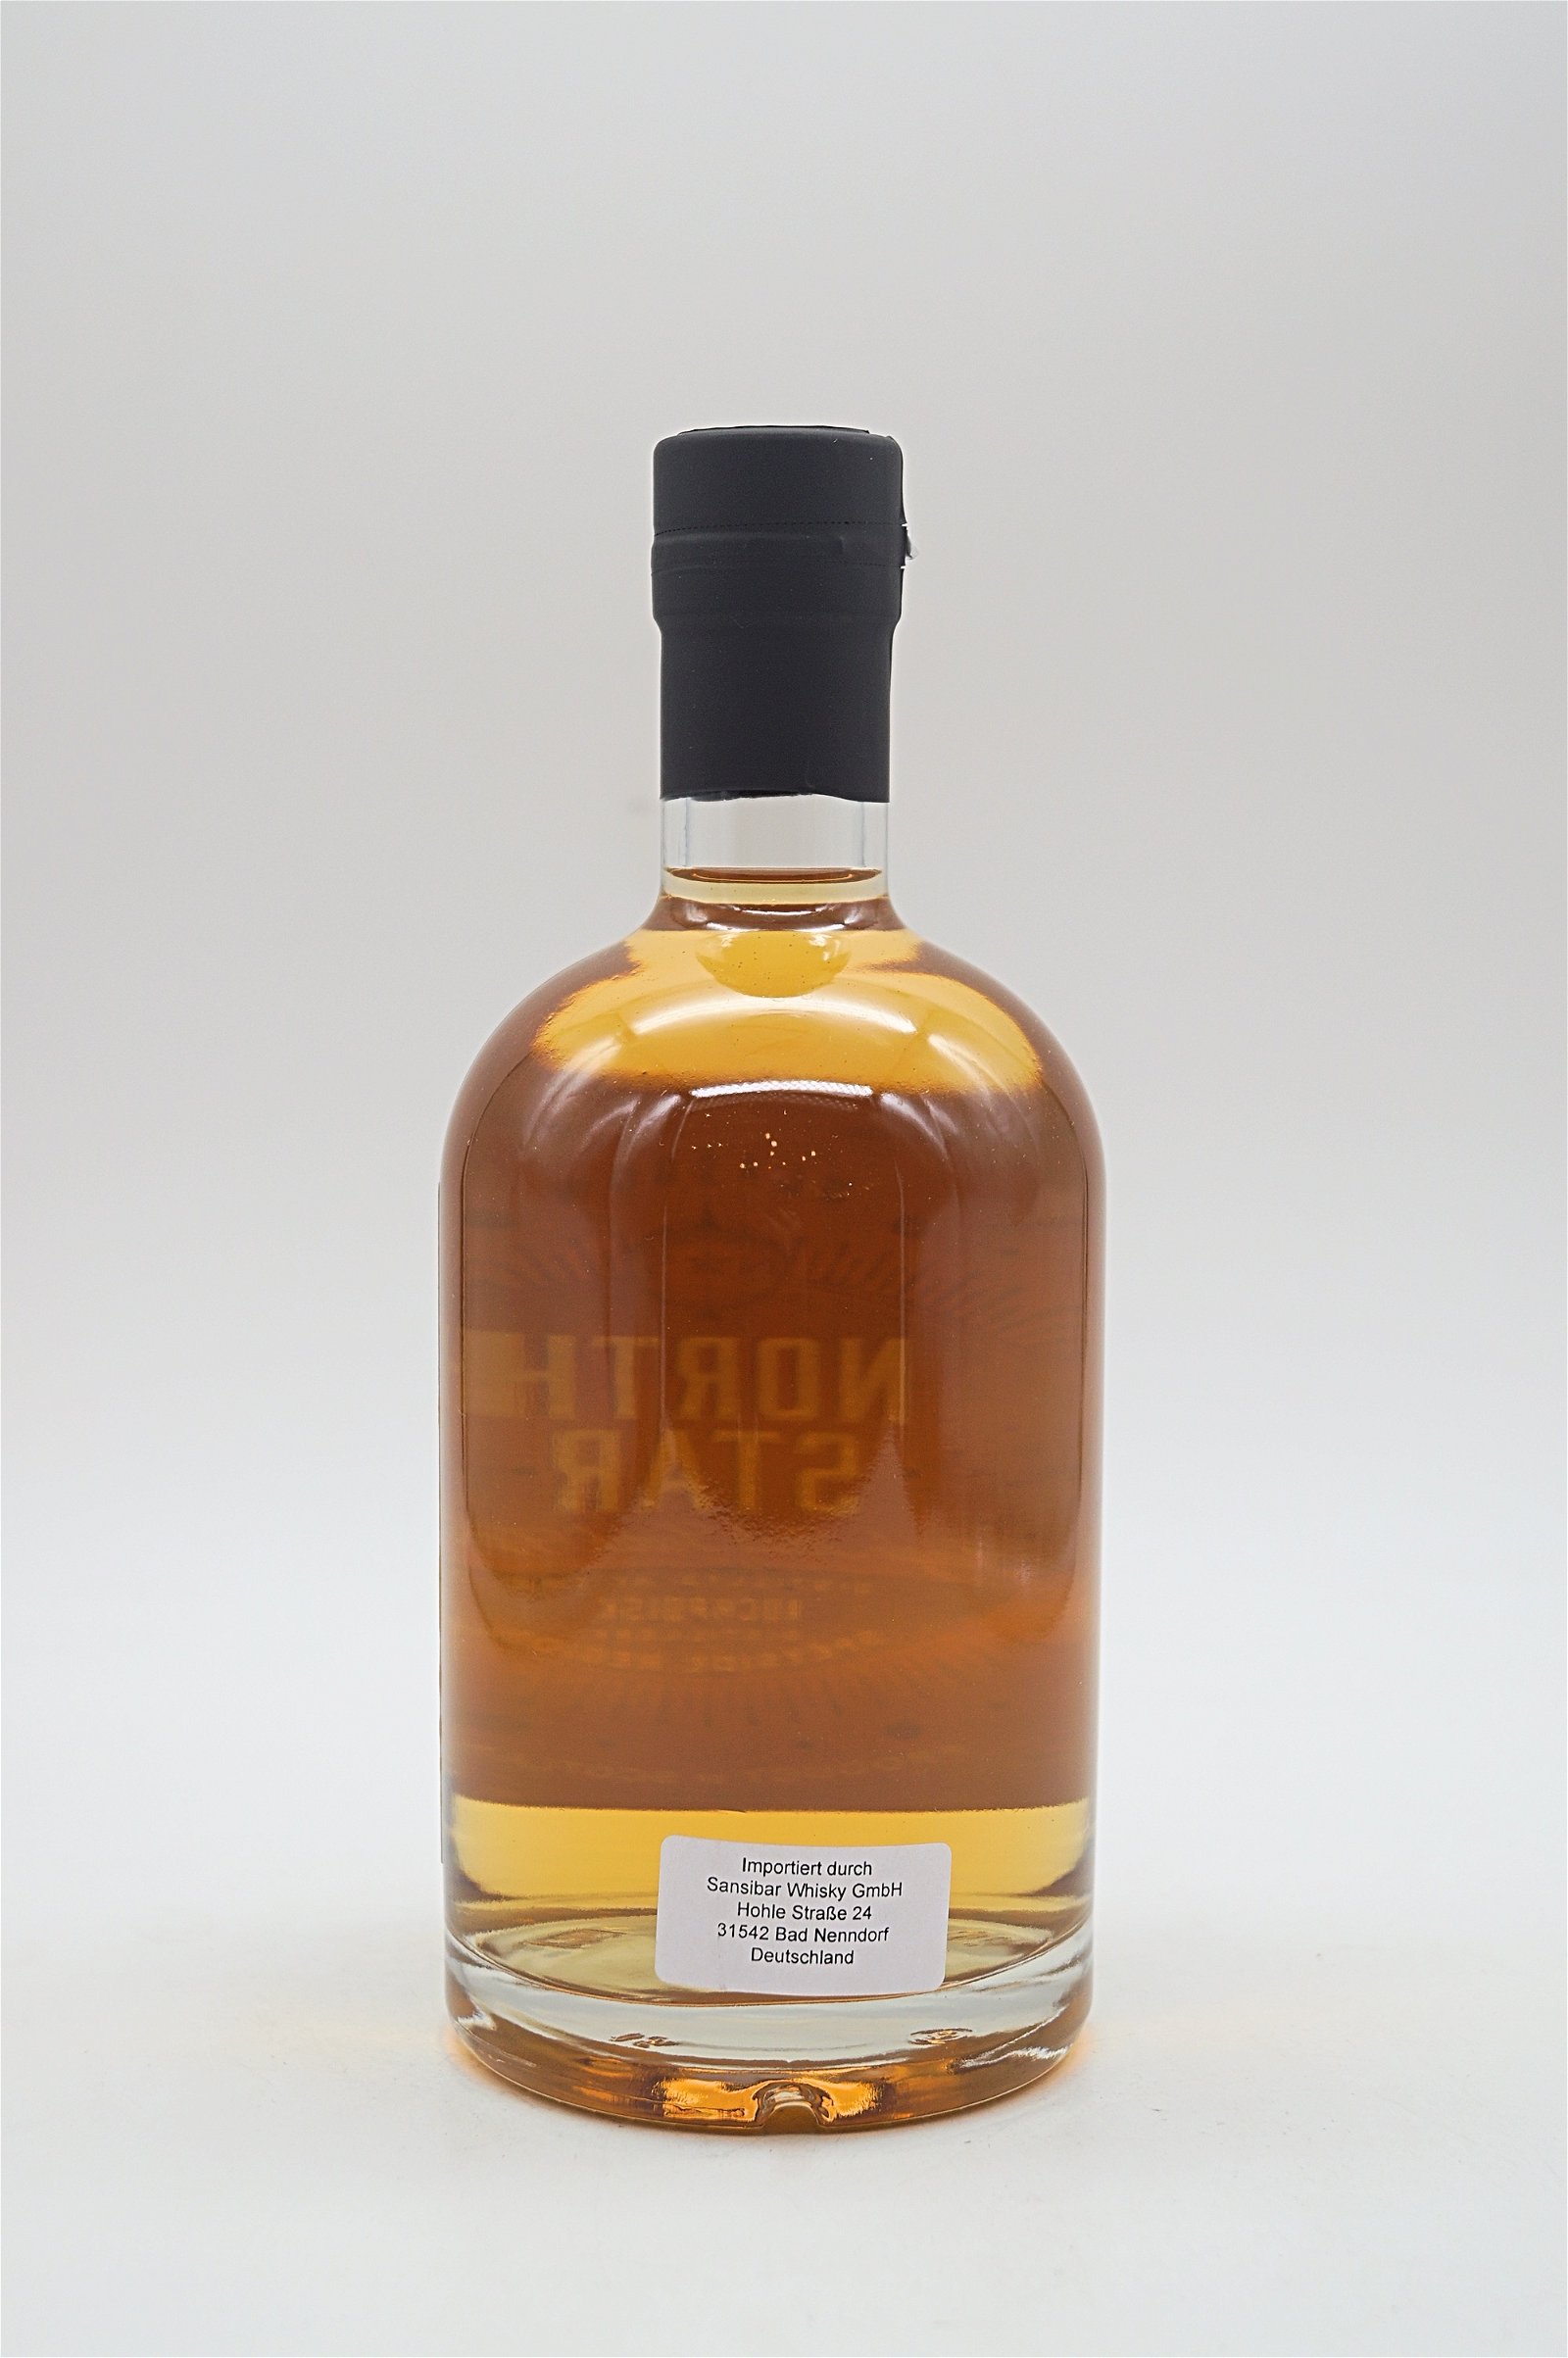 North Star Cask Series 14 Auchroisk Oloroso Sherry Finished Single Malt Scotch Whisky